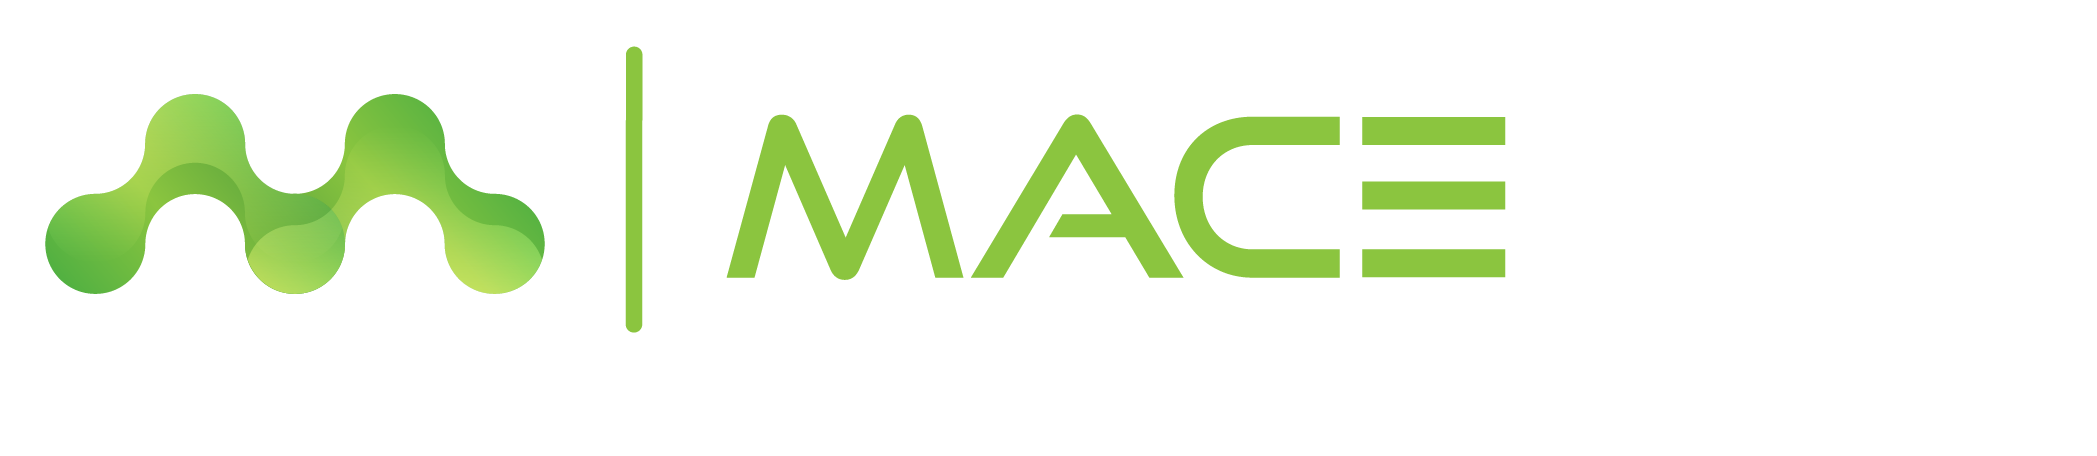 macesol Technologies